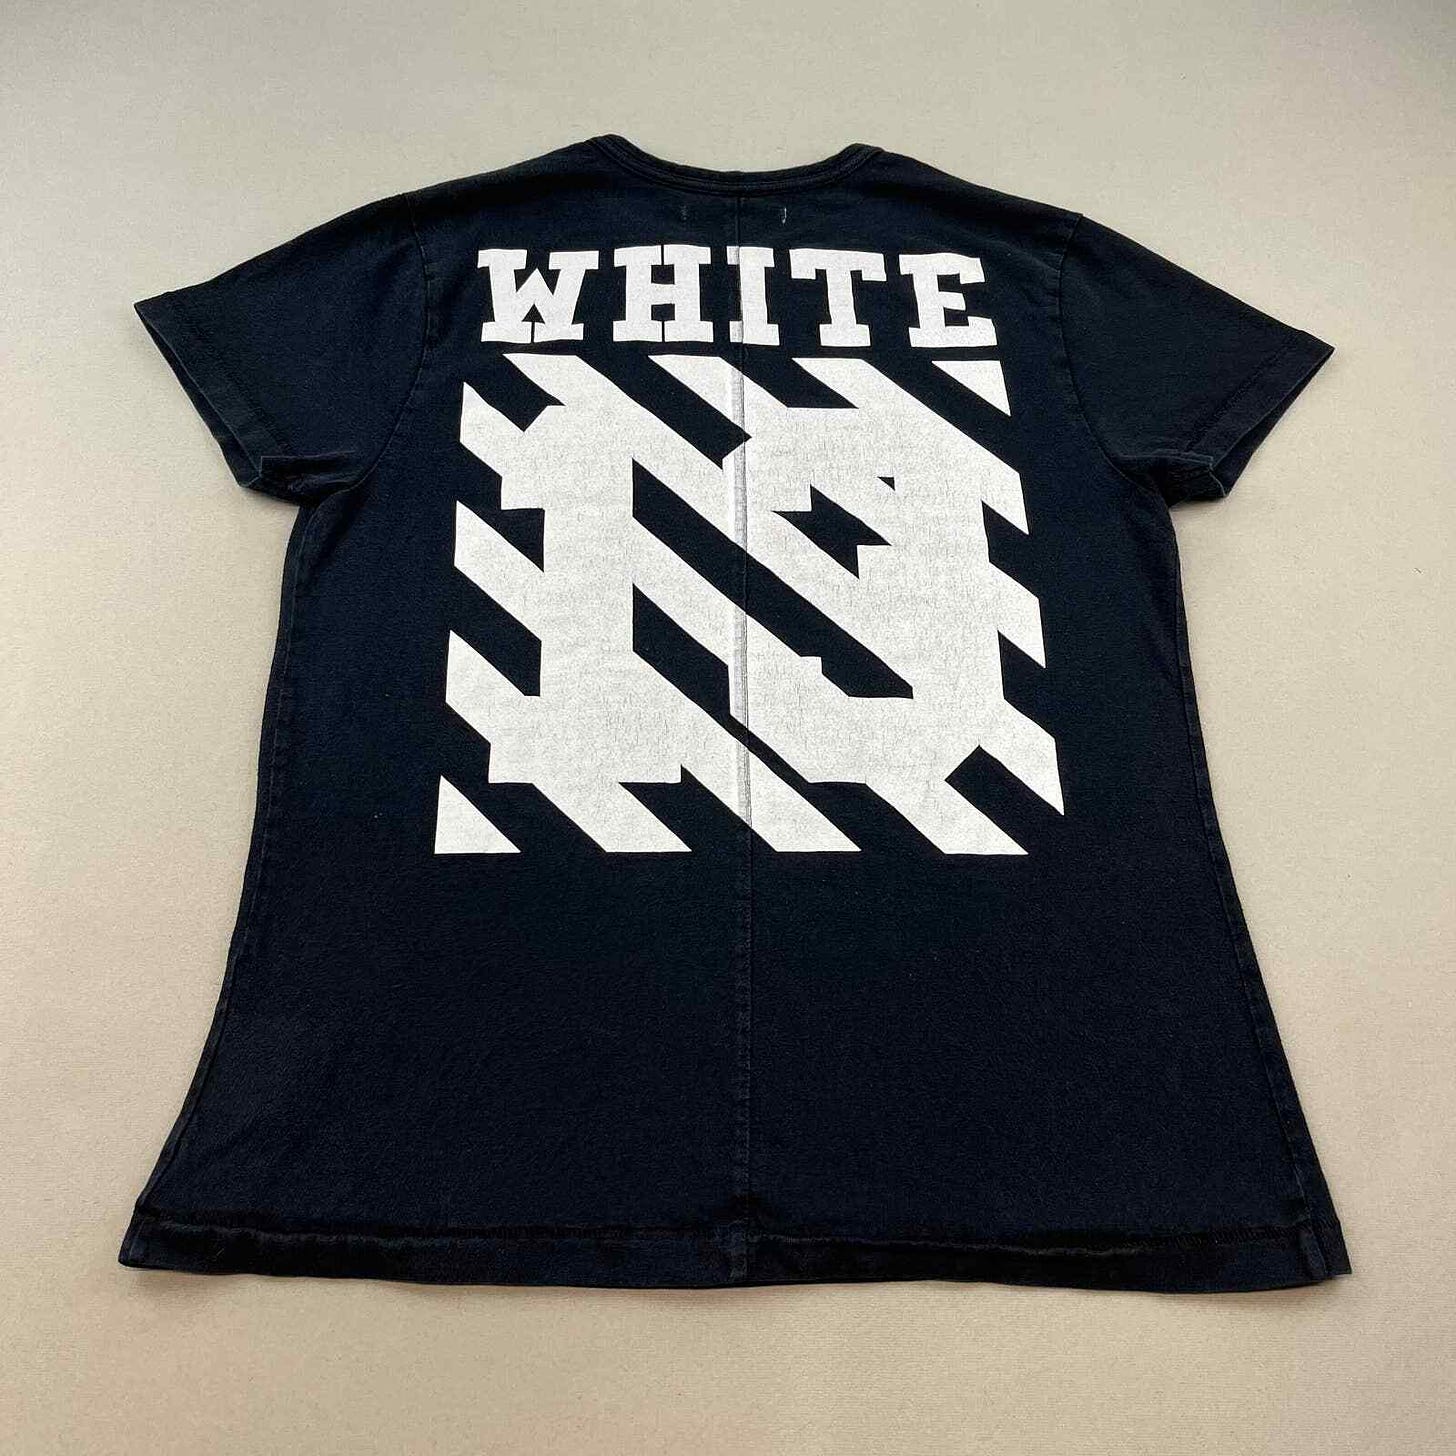 Off White Caravaggio Virgil Abloh Original Collection 2014 Shirt XS Black  White | eBay